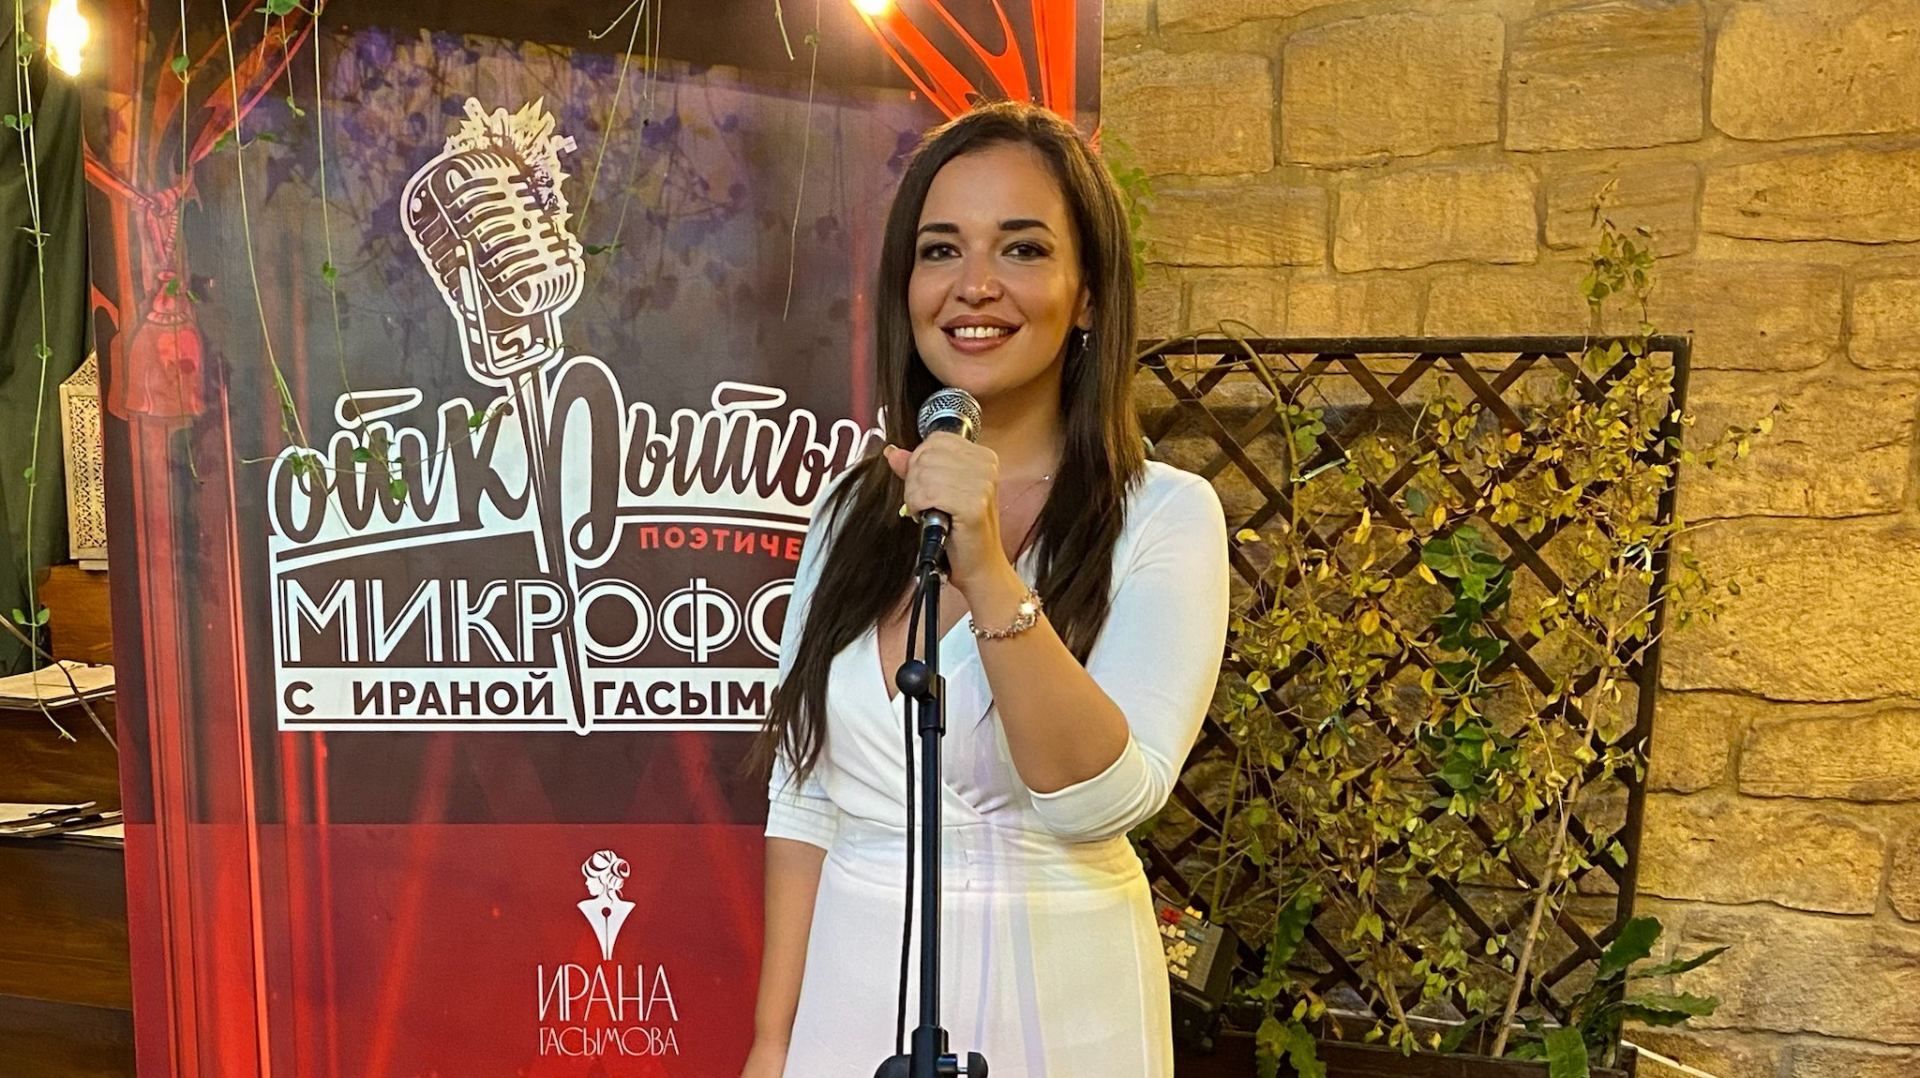 Baku hosts Open Poetry Microphone with Irana Gasimova [PHOTOS]